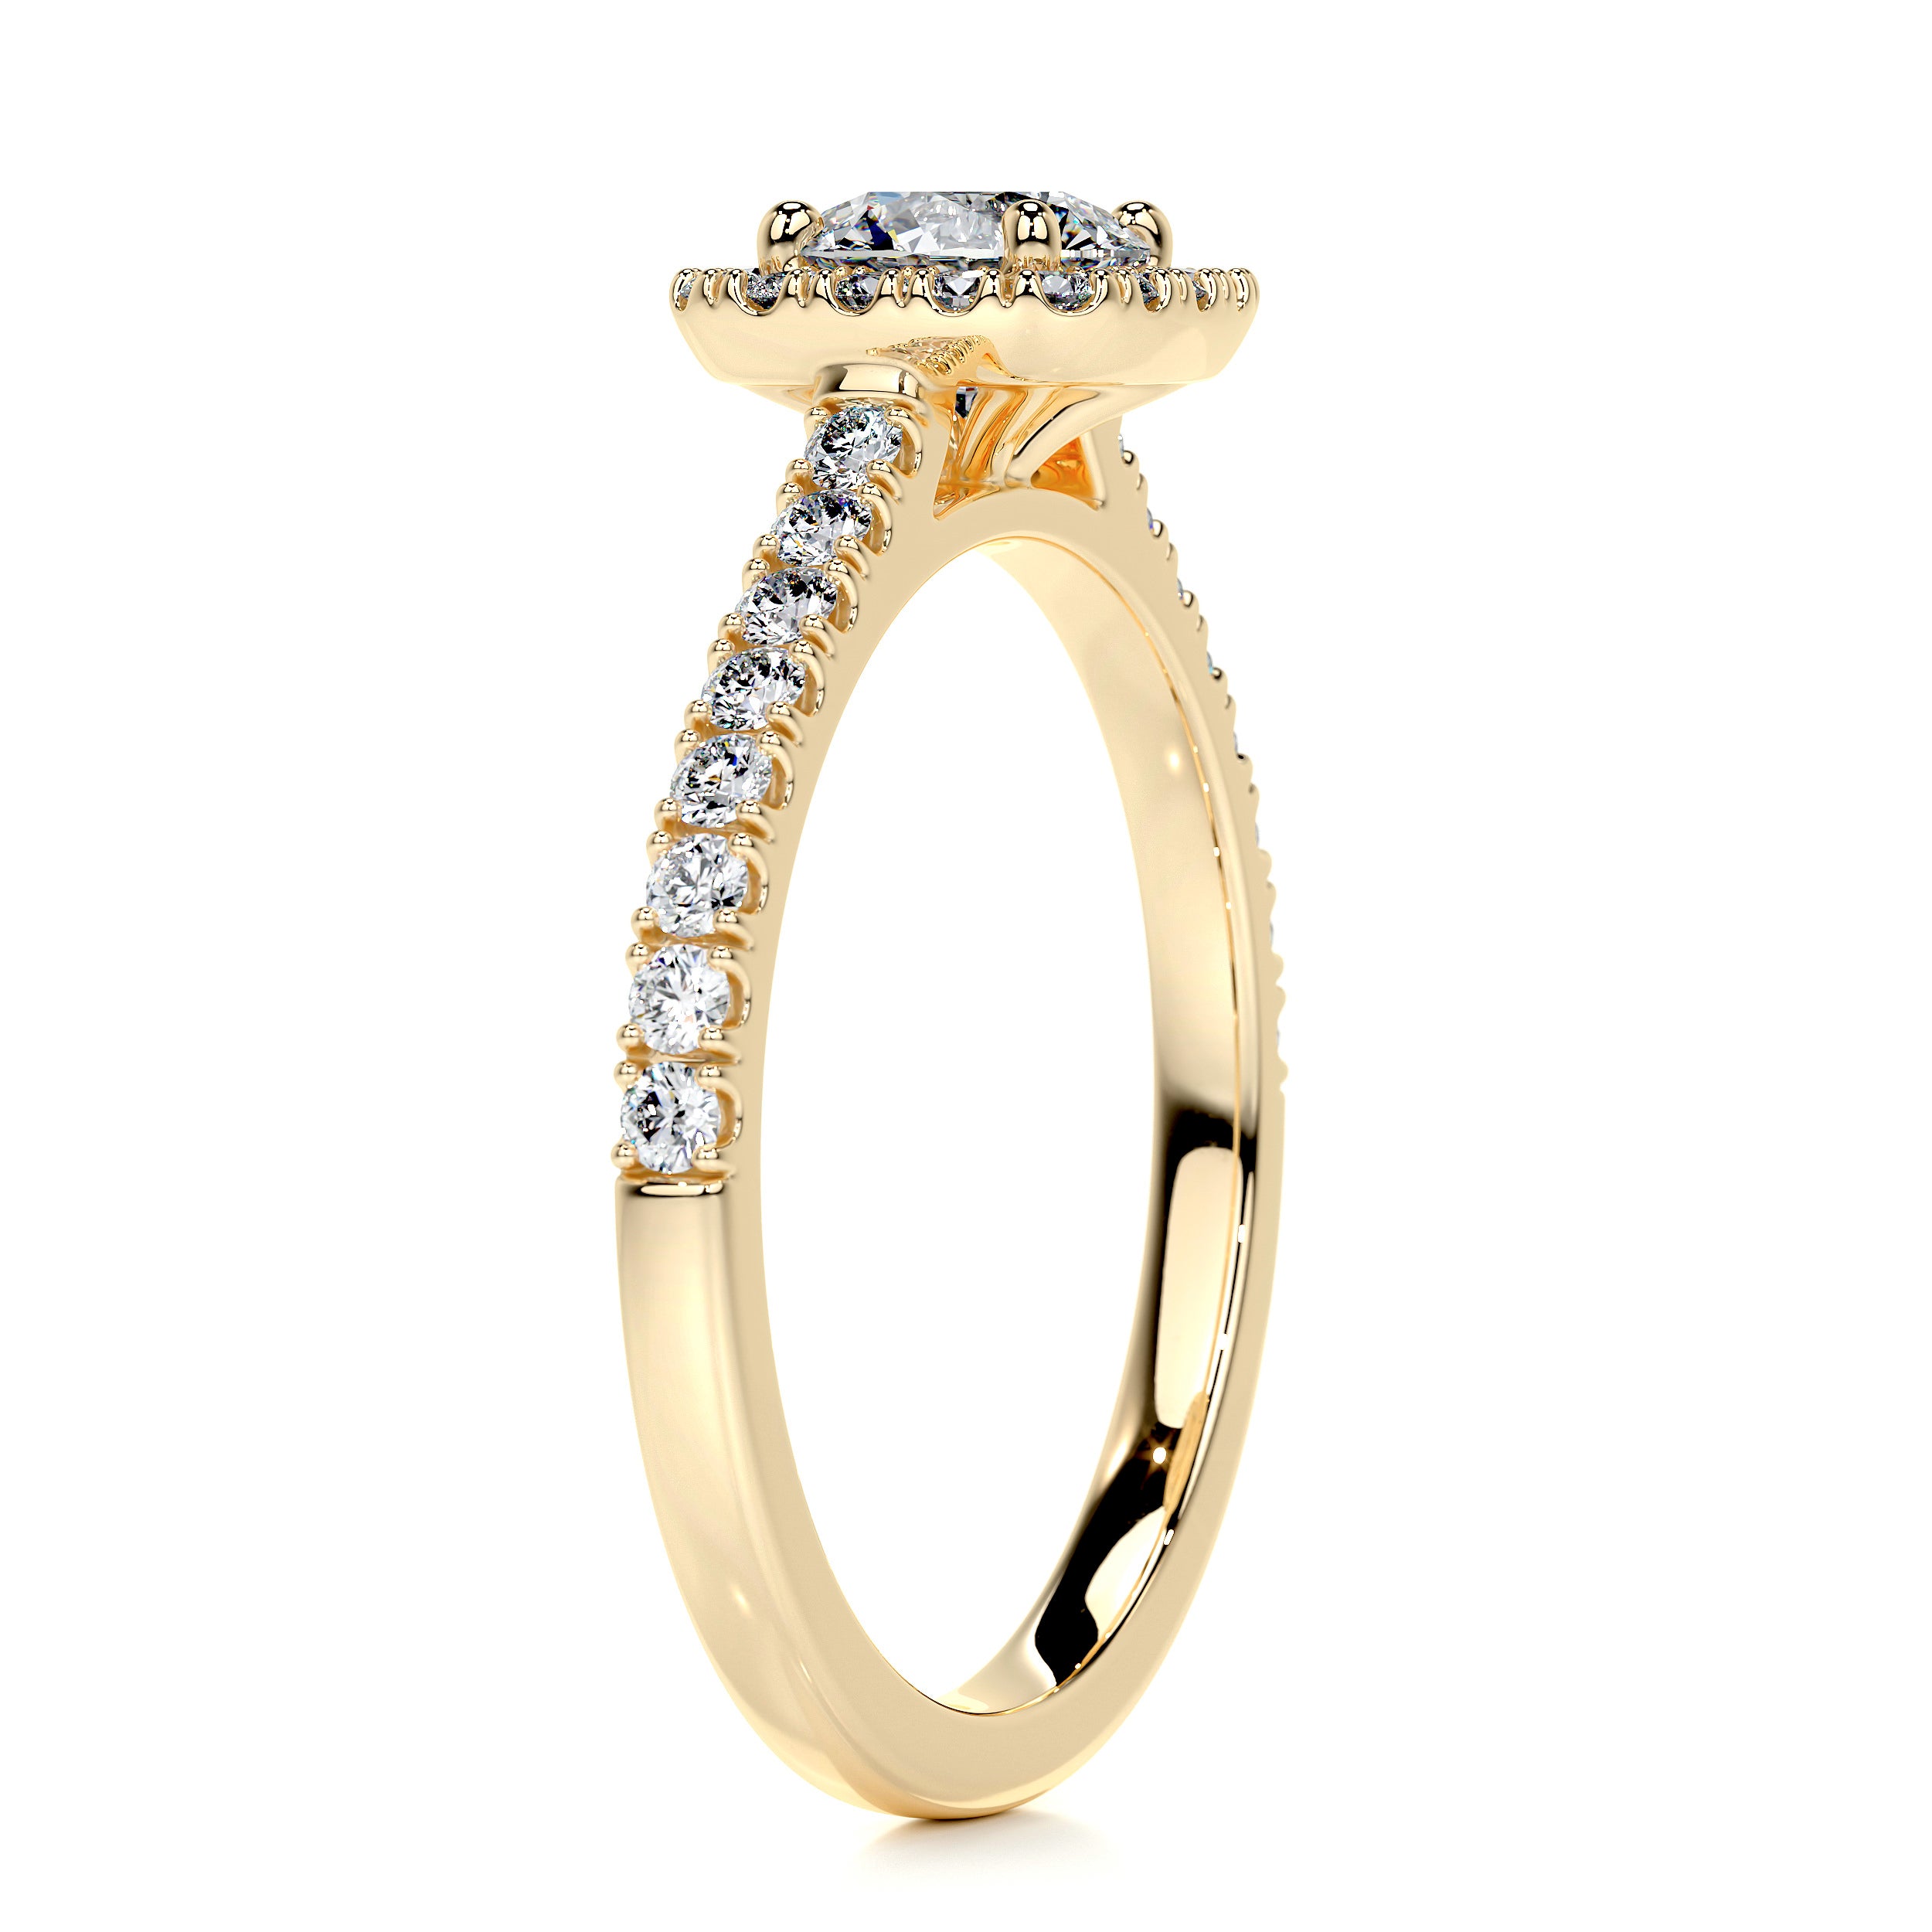 Claudia Diamond Engagement Ring   (0.70 Carat) -18K Yellow Gold